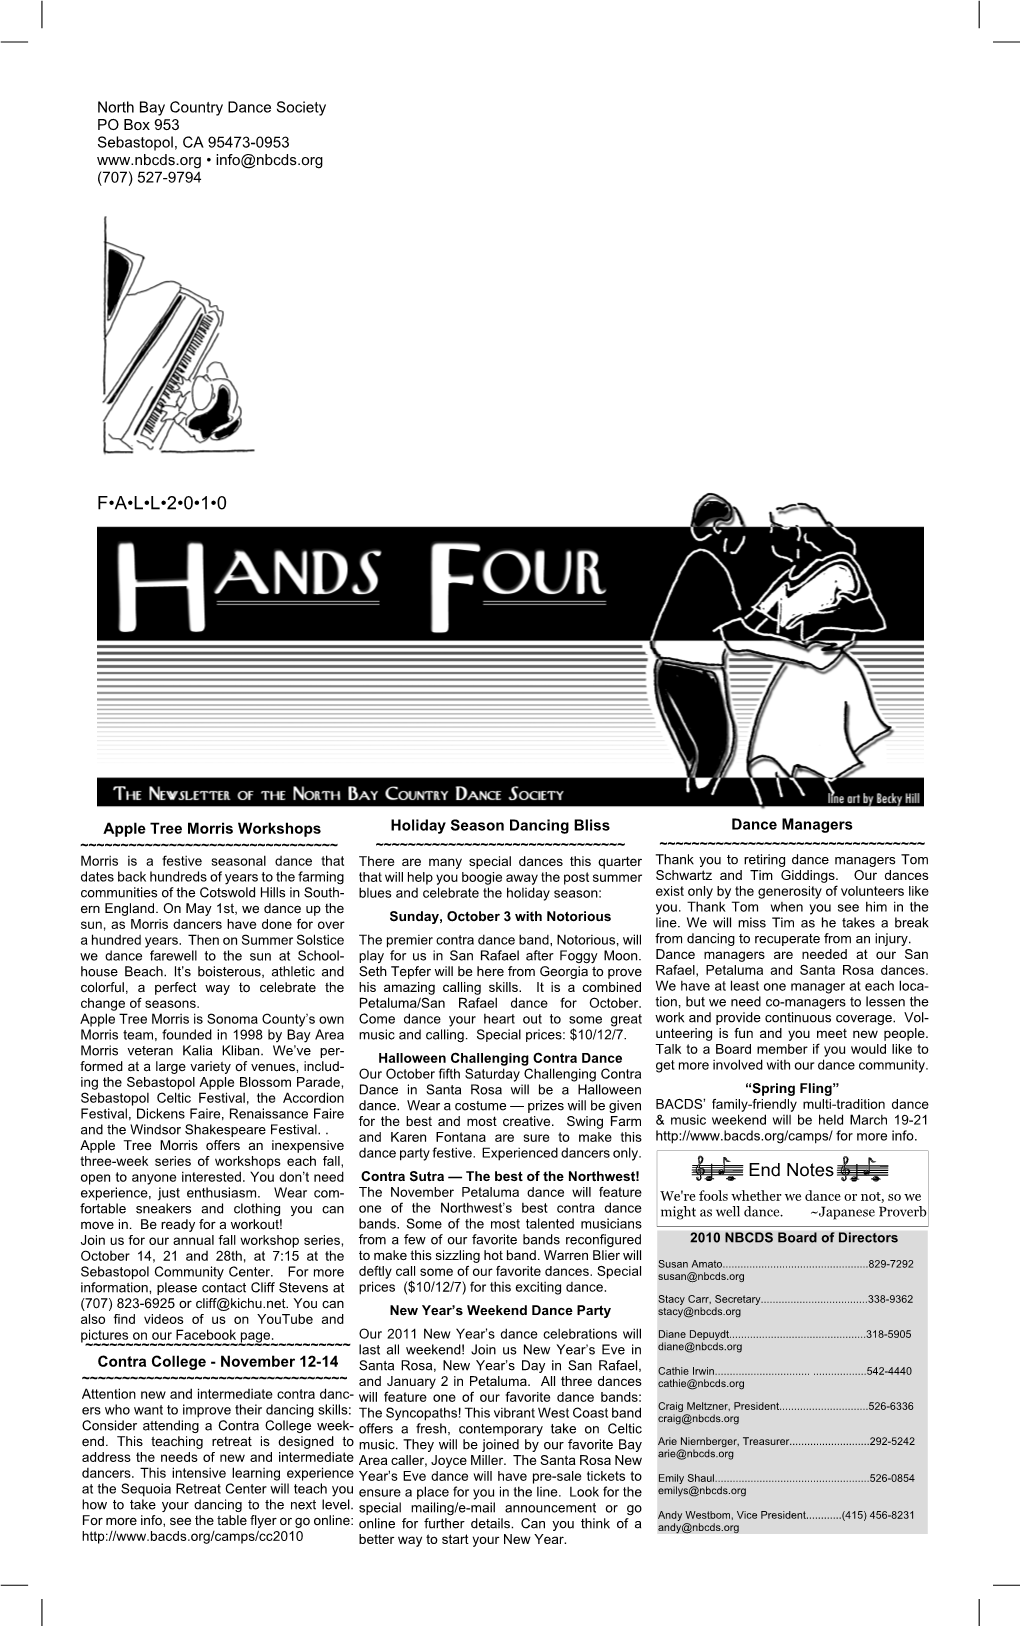 Hands Four Fall 2010